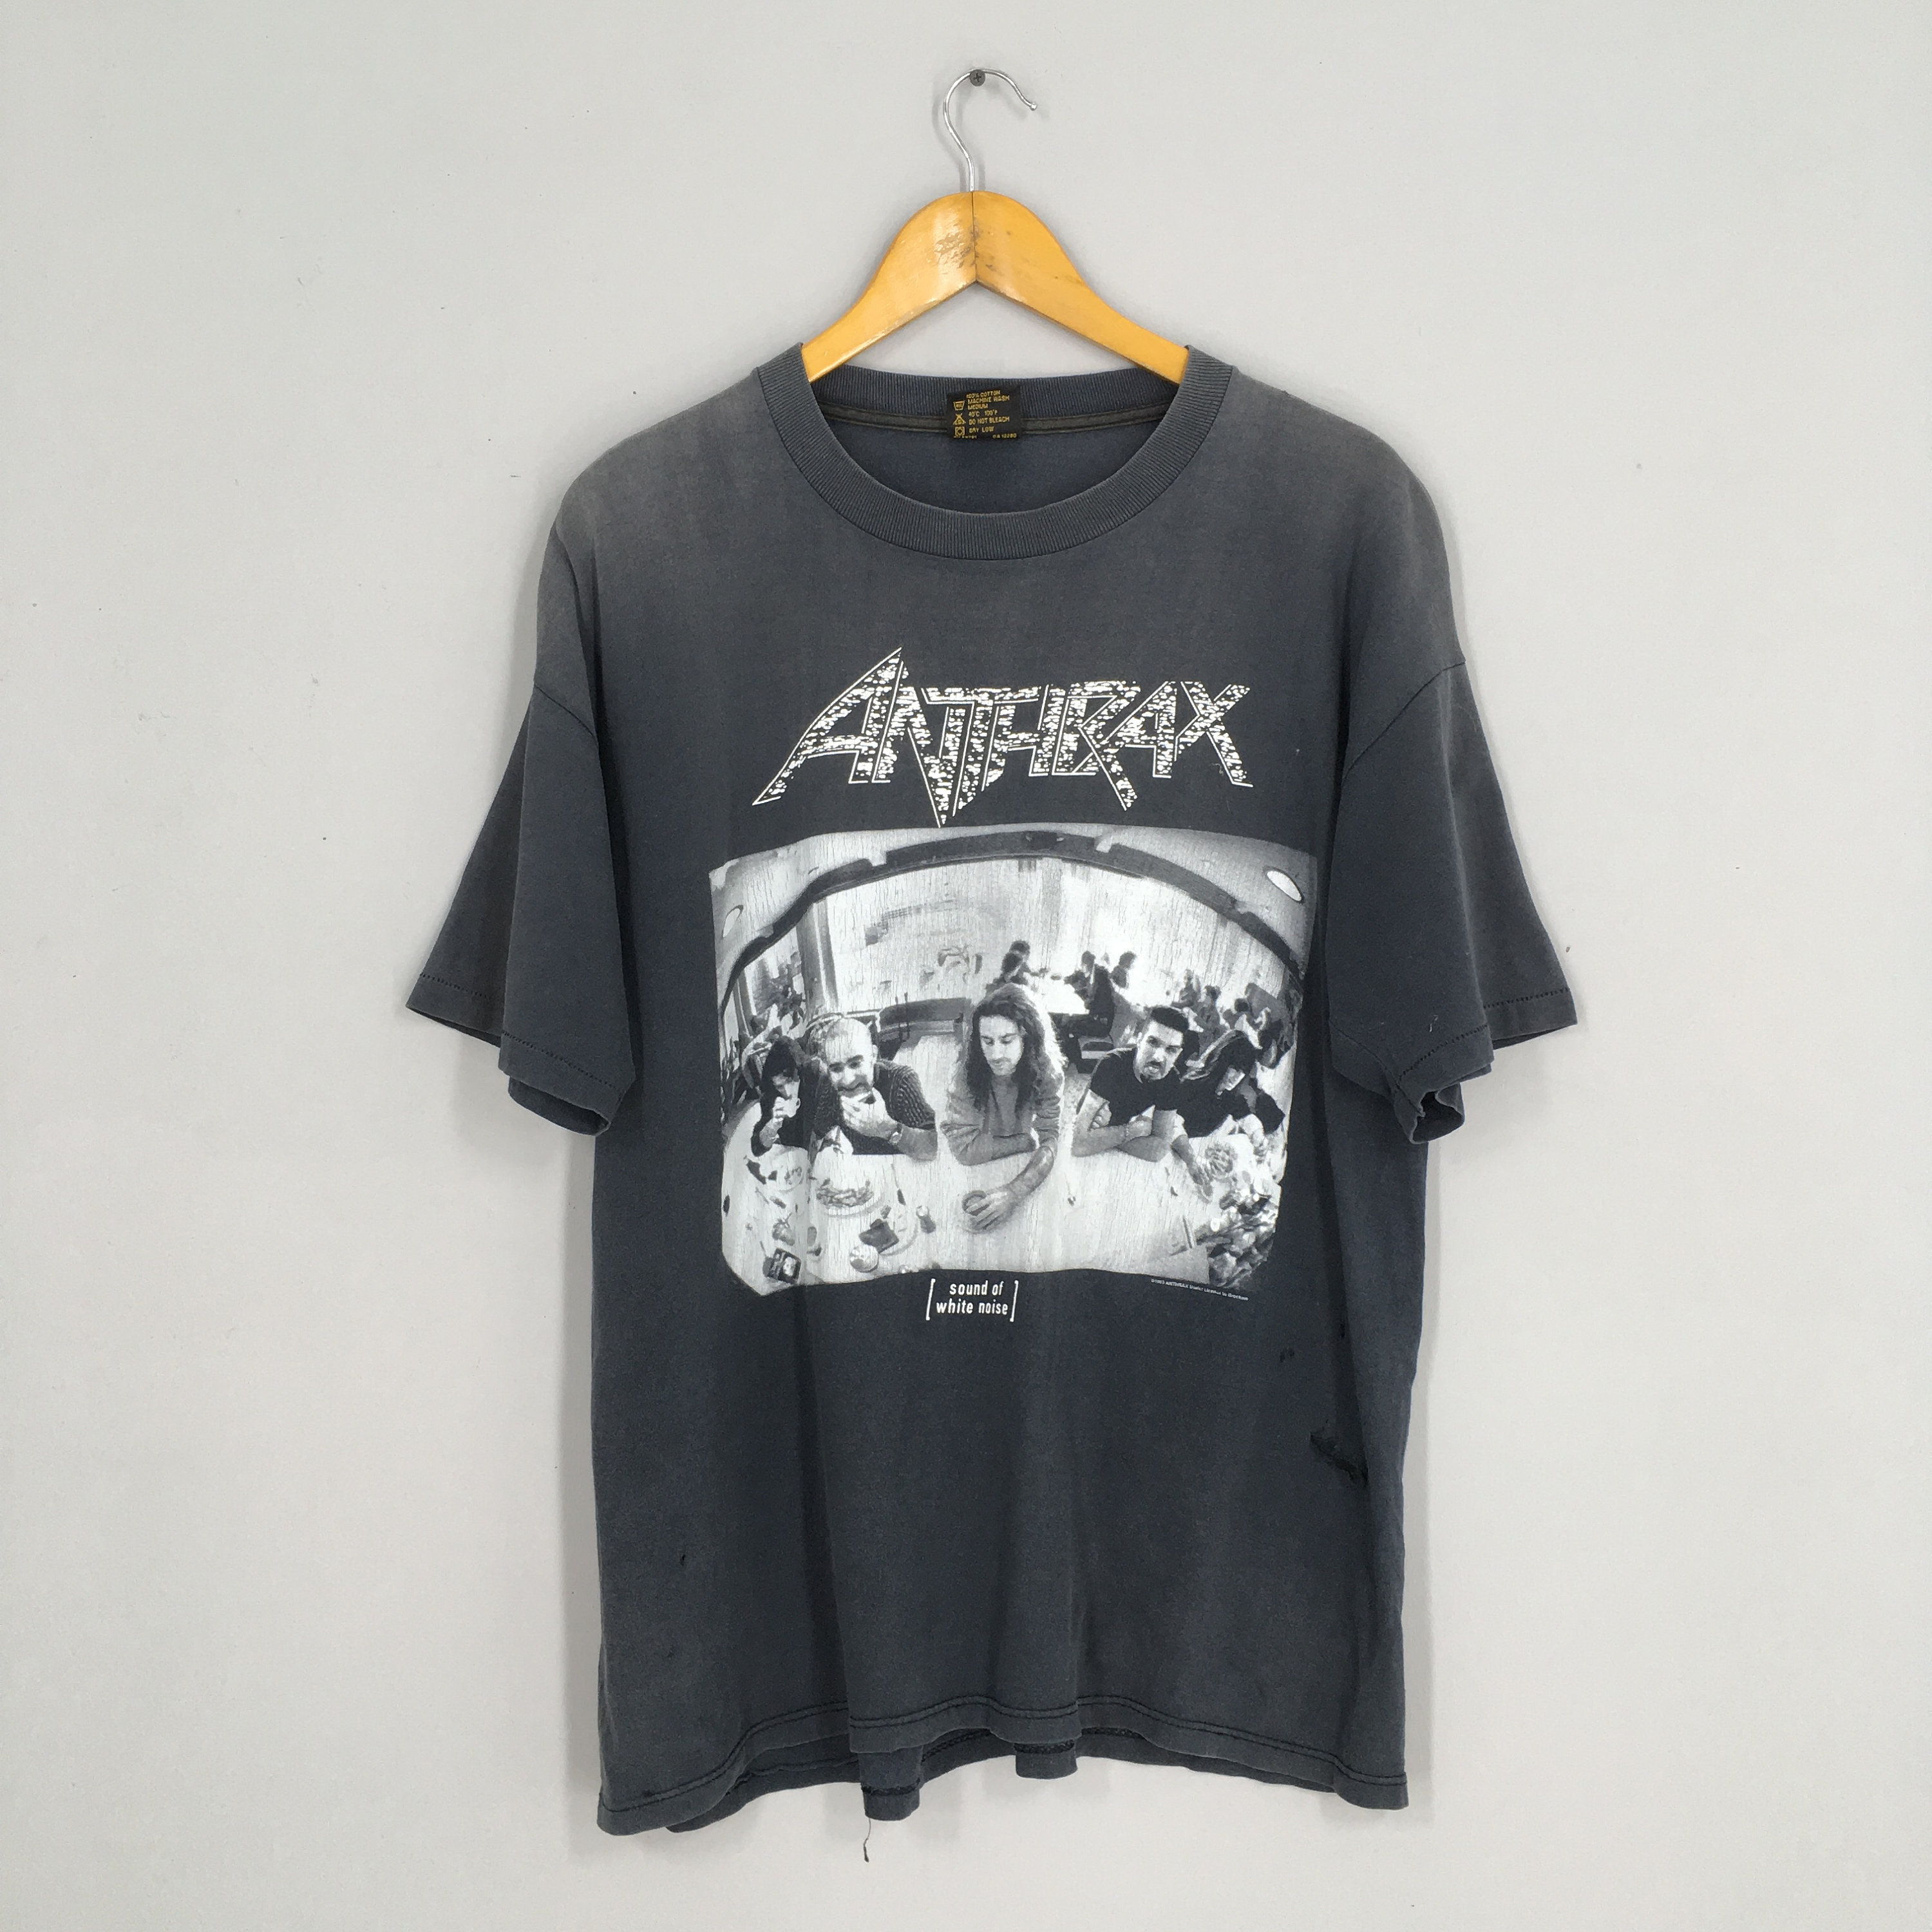 Vintage Anthrax Sound of White Noise Tshirt Xlarge 1990s - Etsy